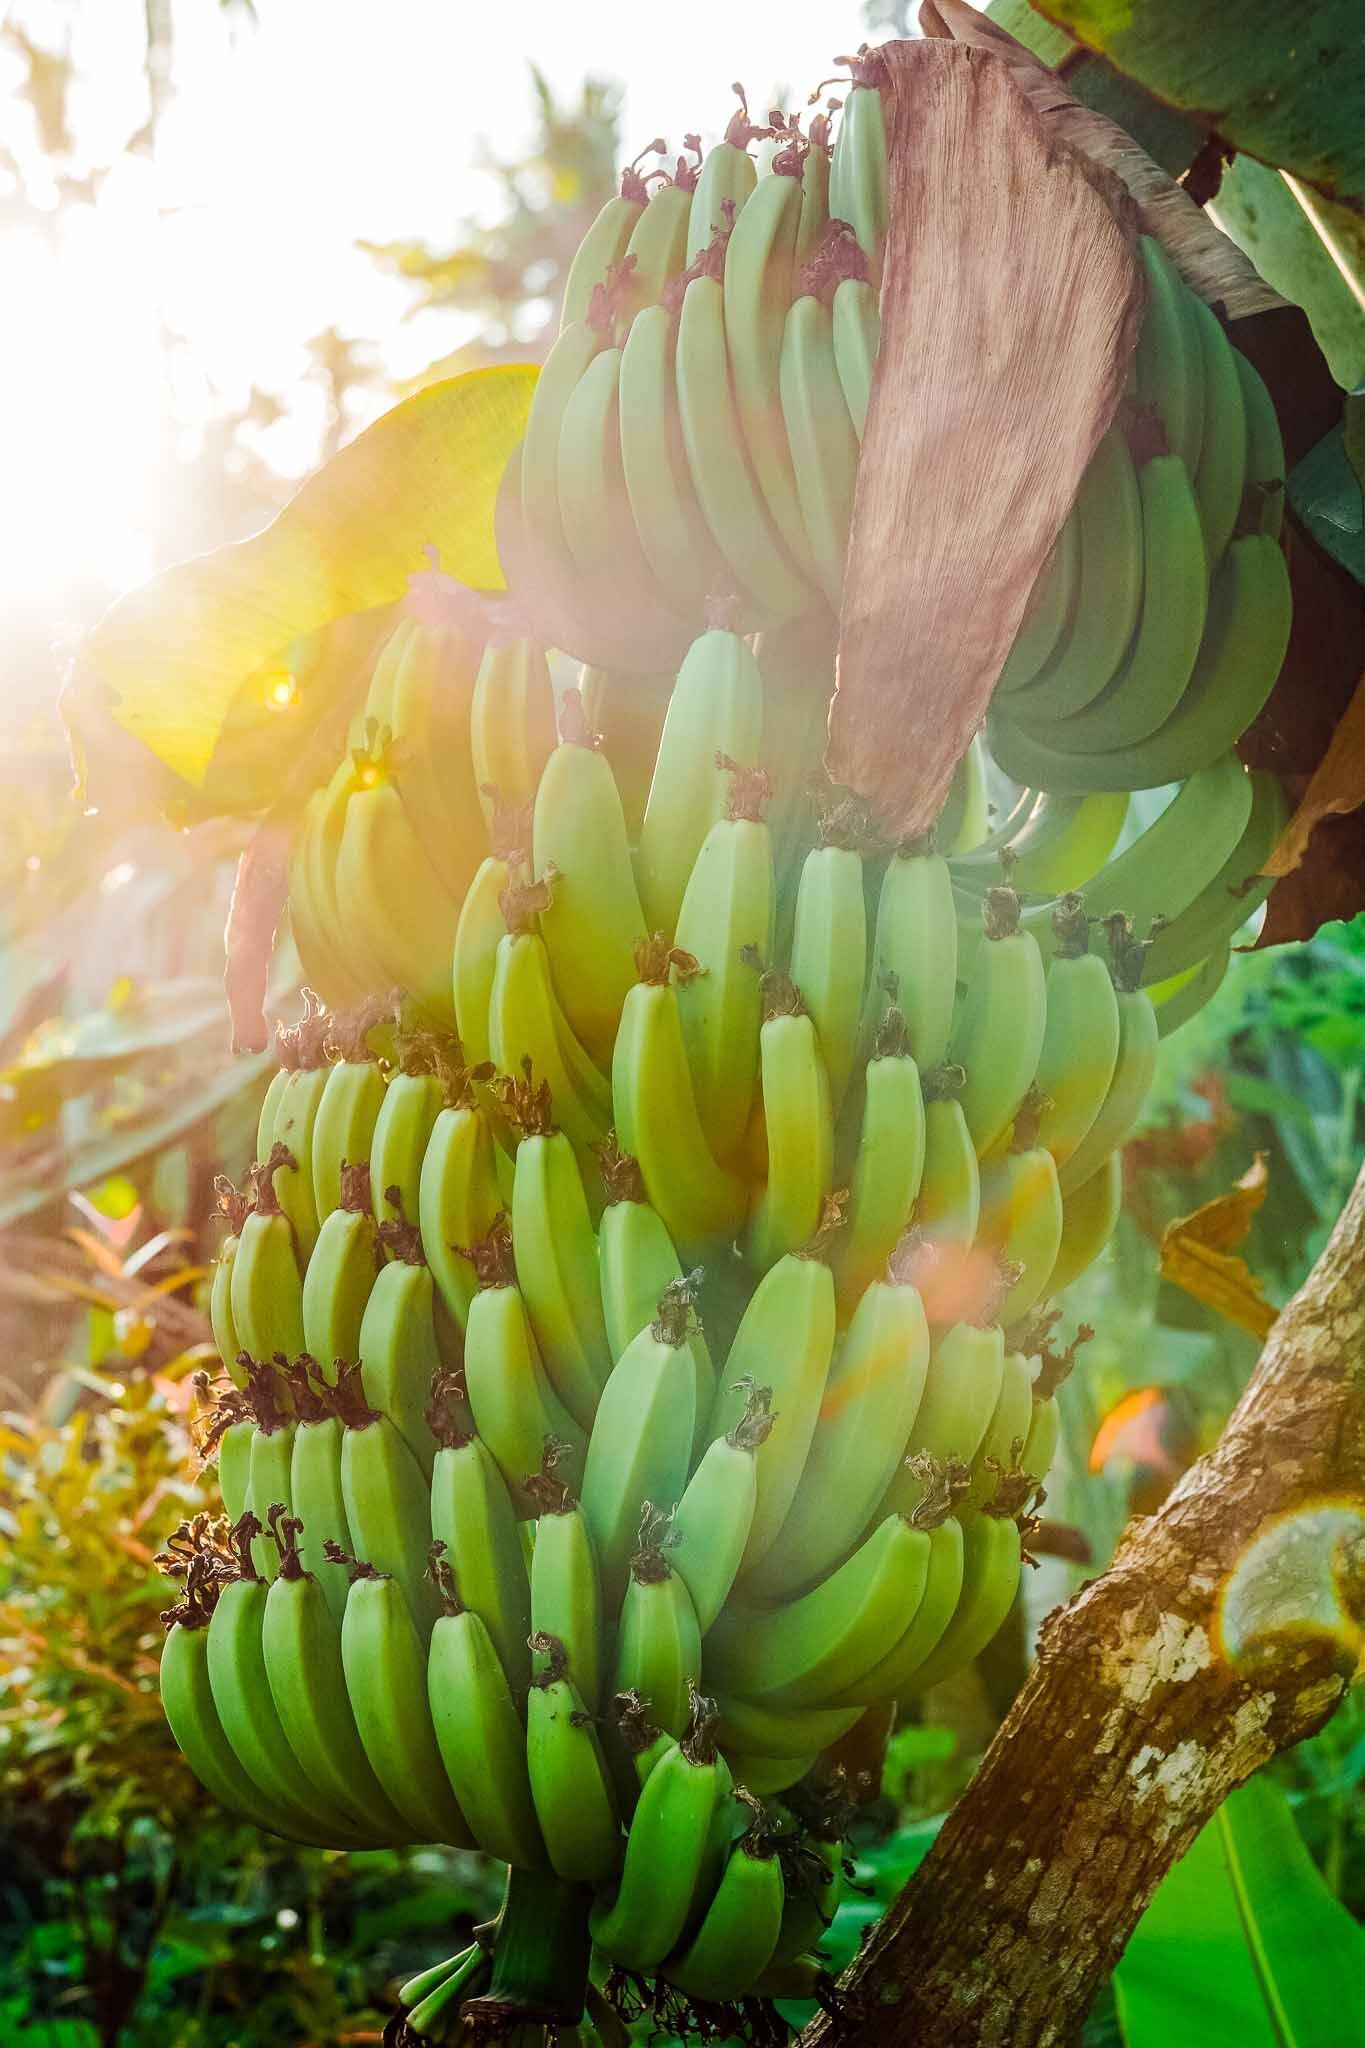 This Crop is Bananas - Charles Jose